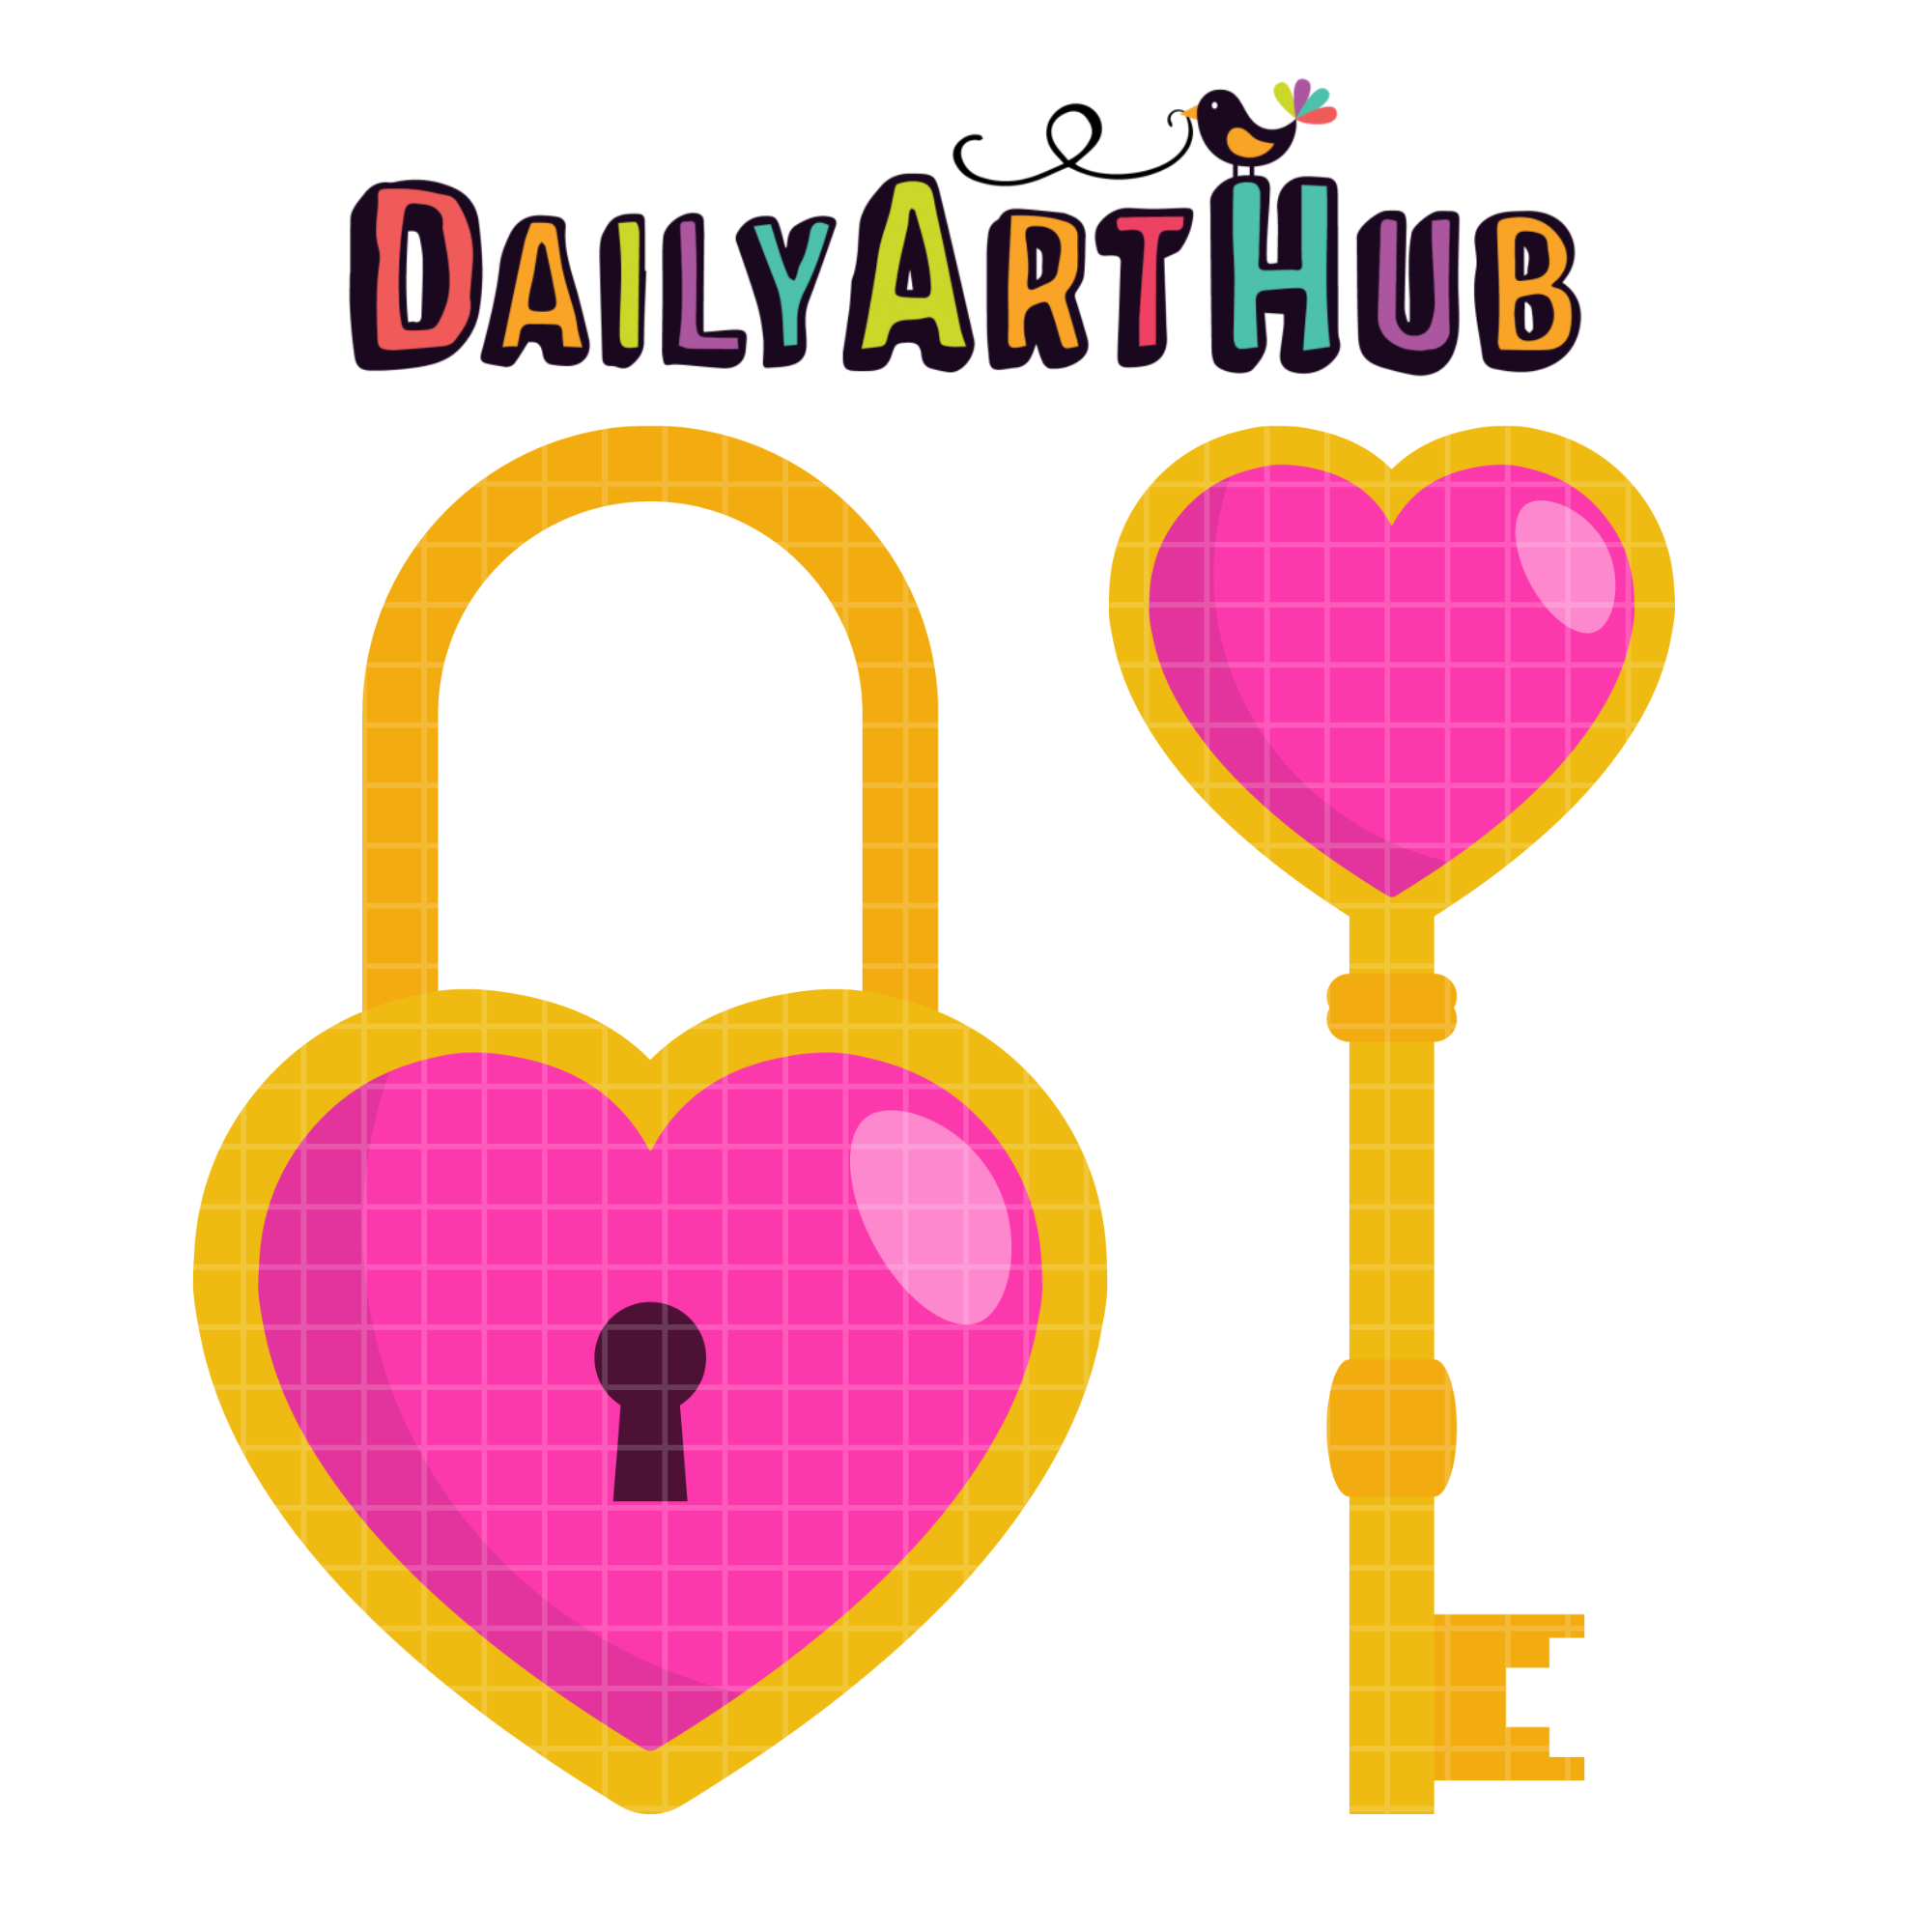 heart key clip art